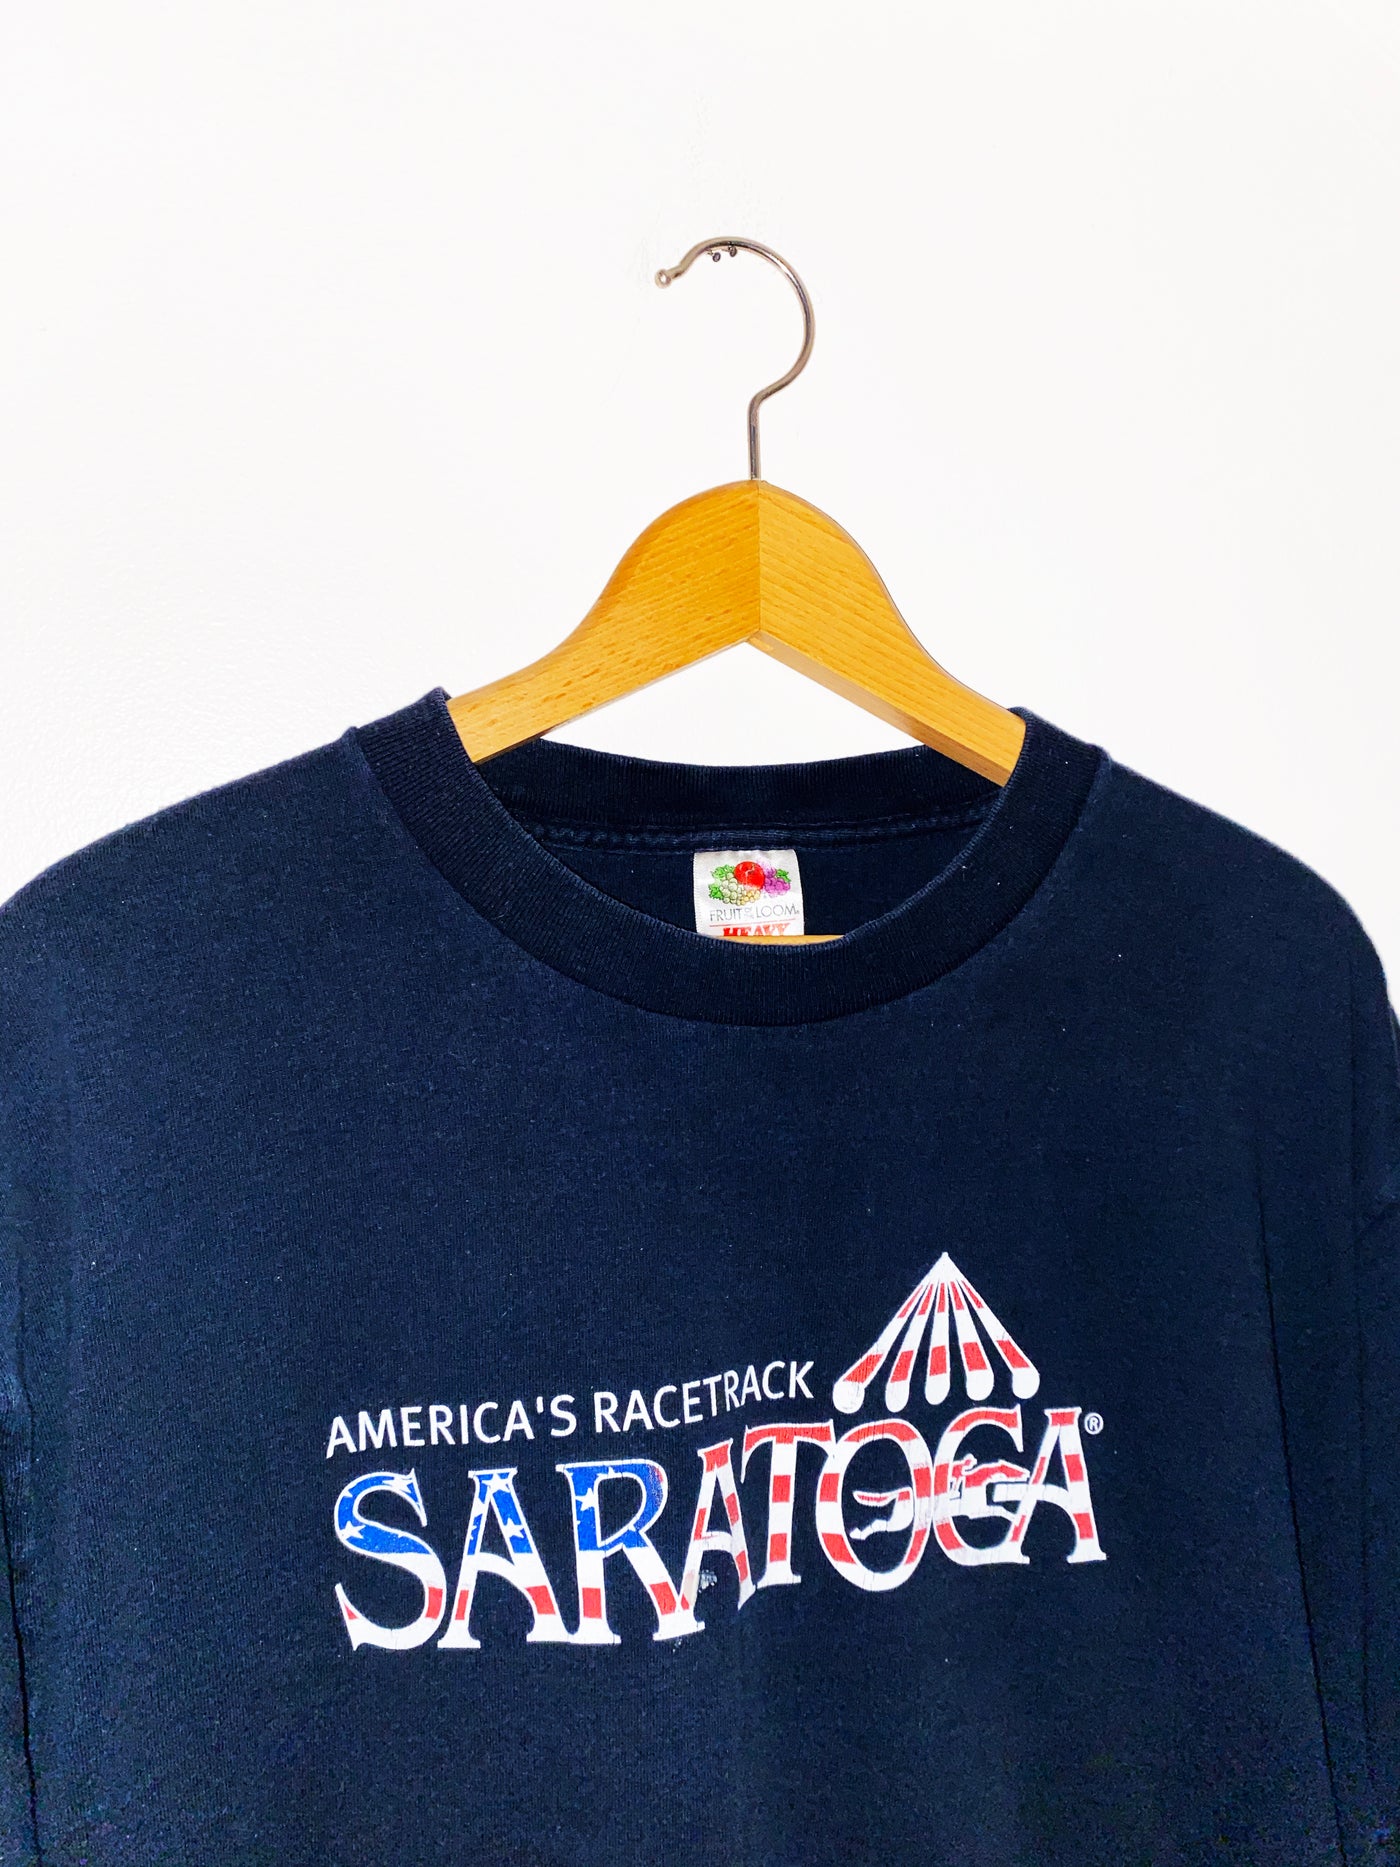 Vintage Saratoga Racetrack T-Shirt